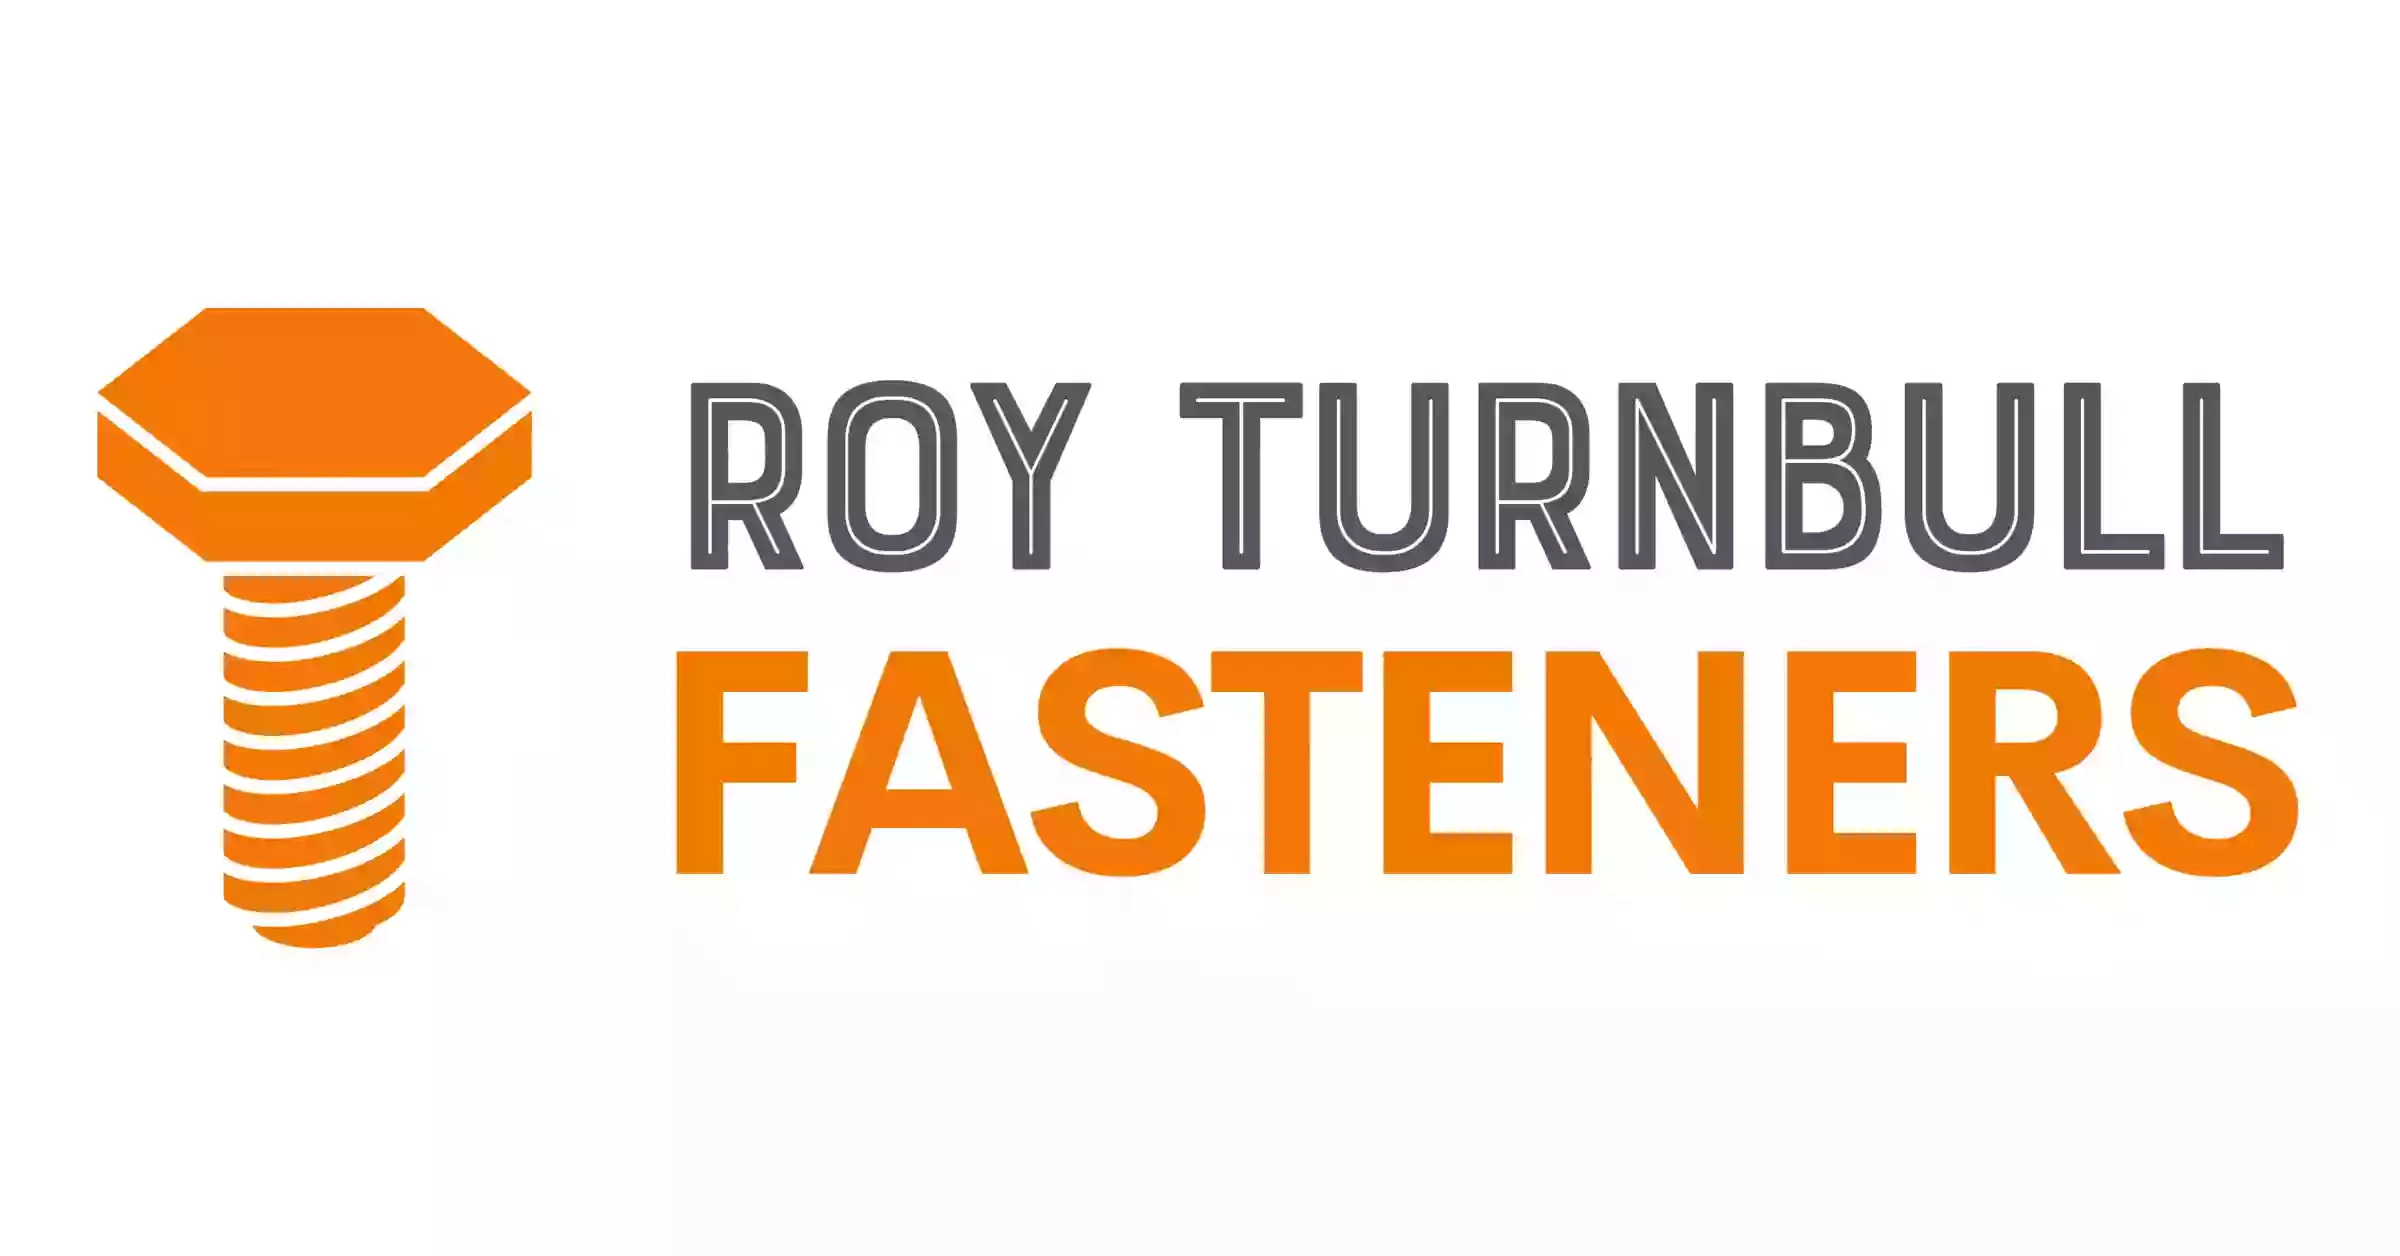 Roy Turnbull Fasteners